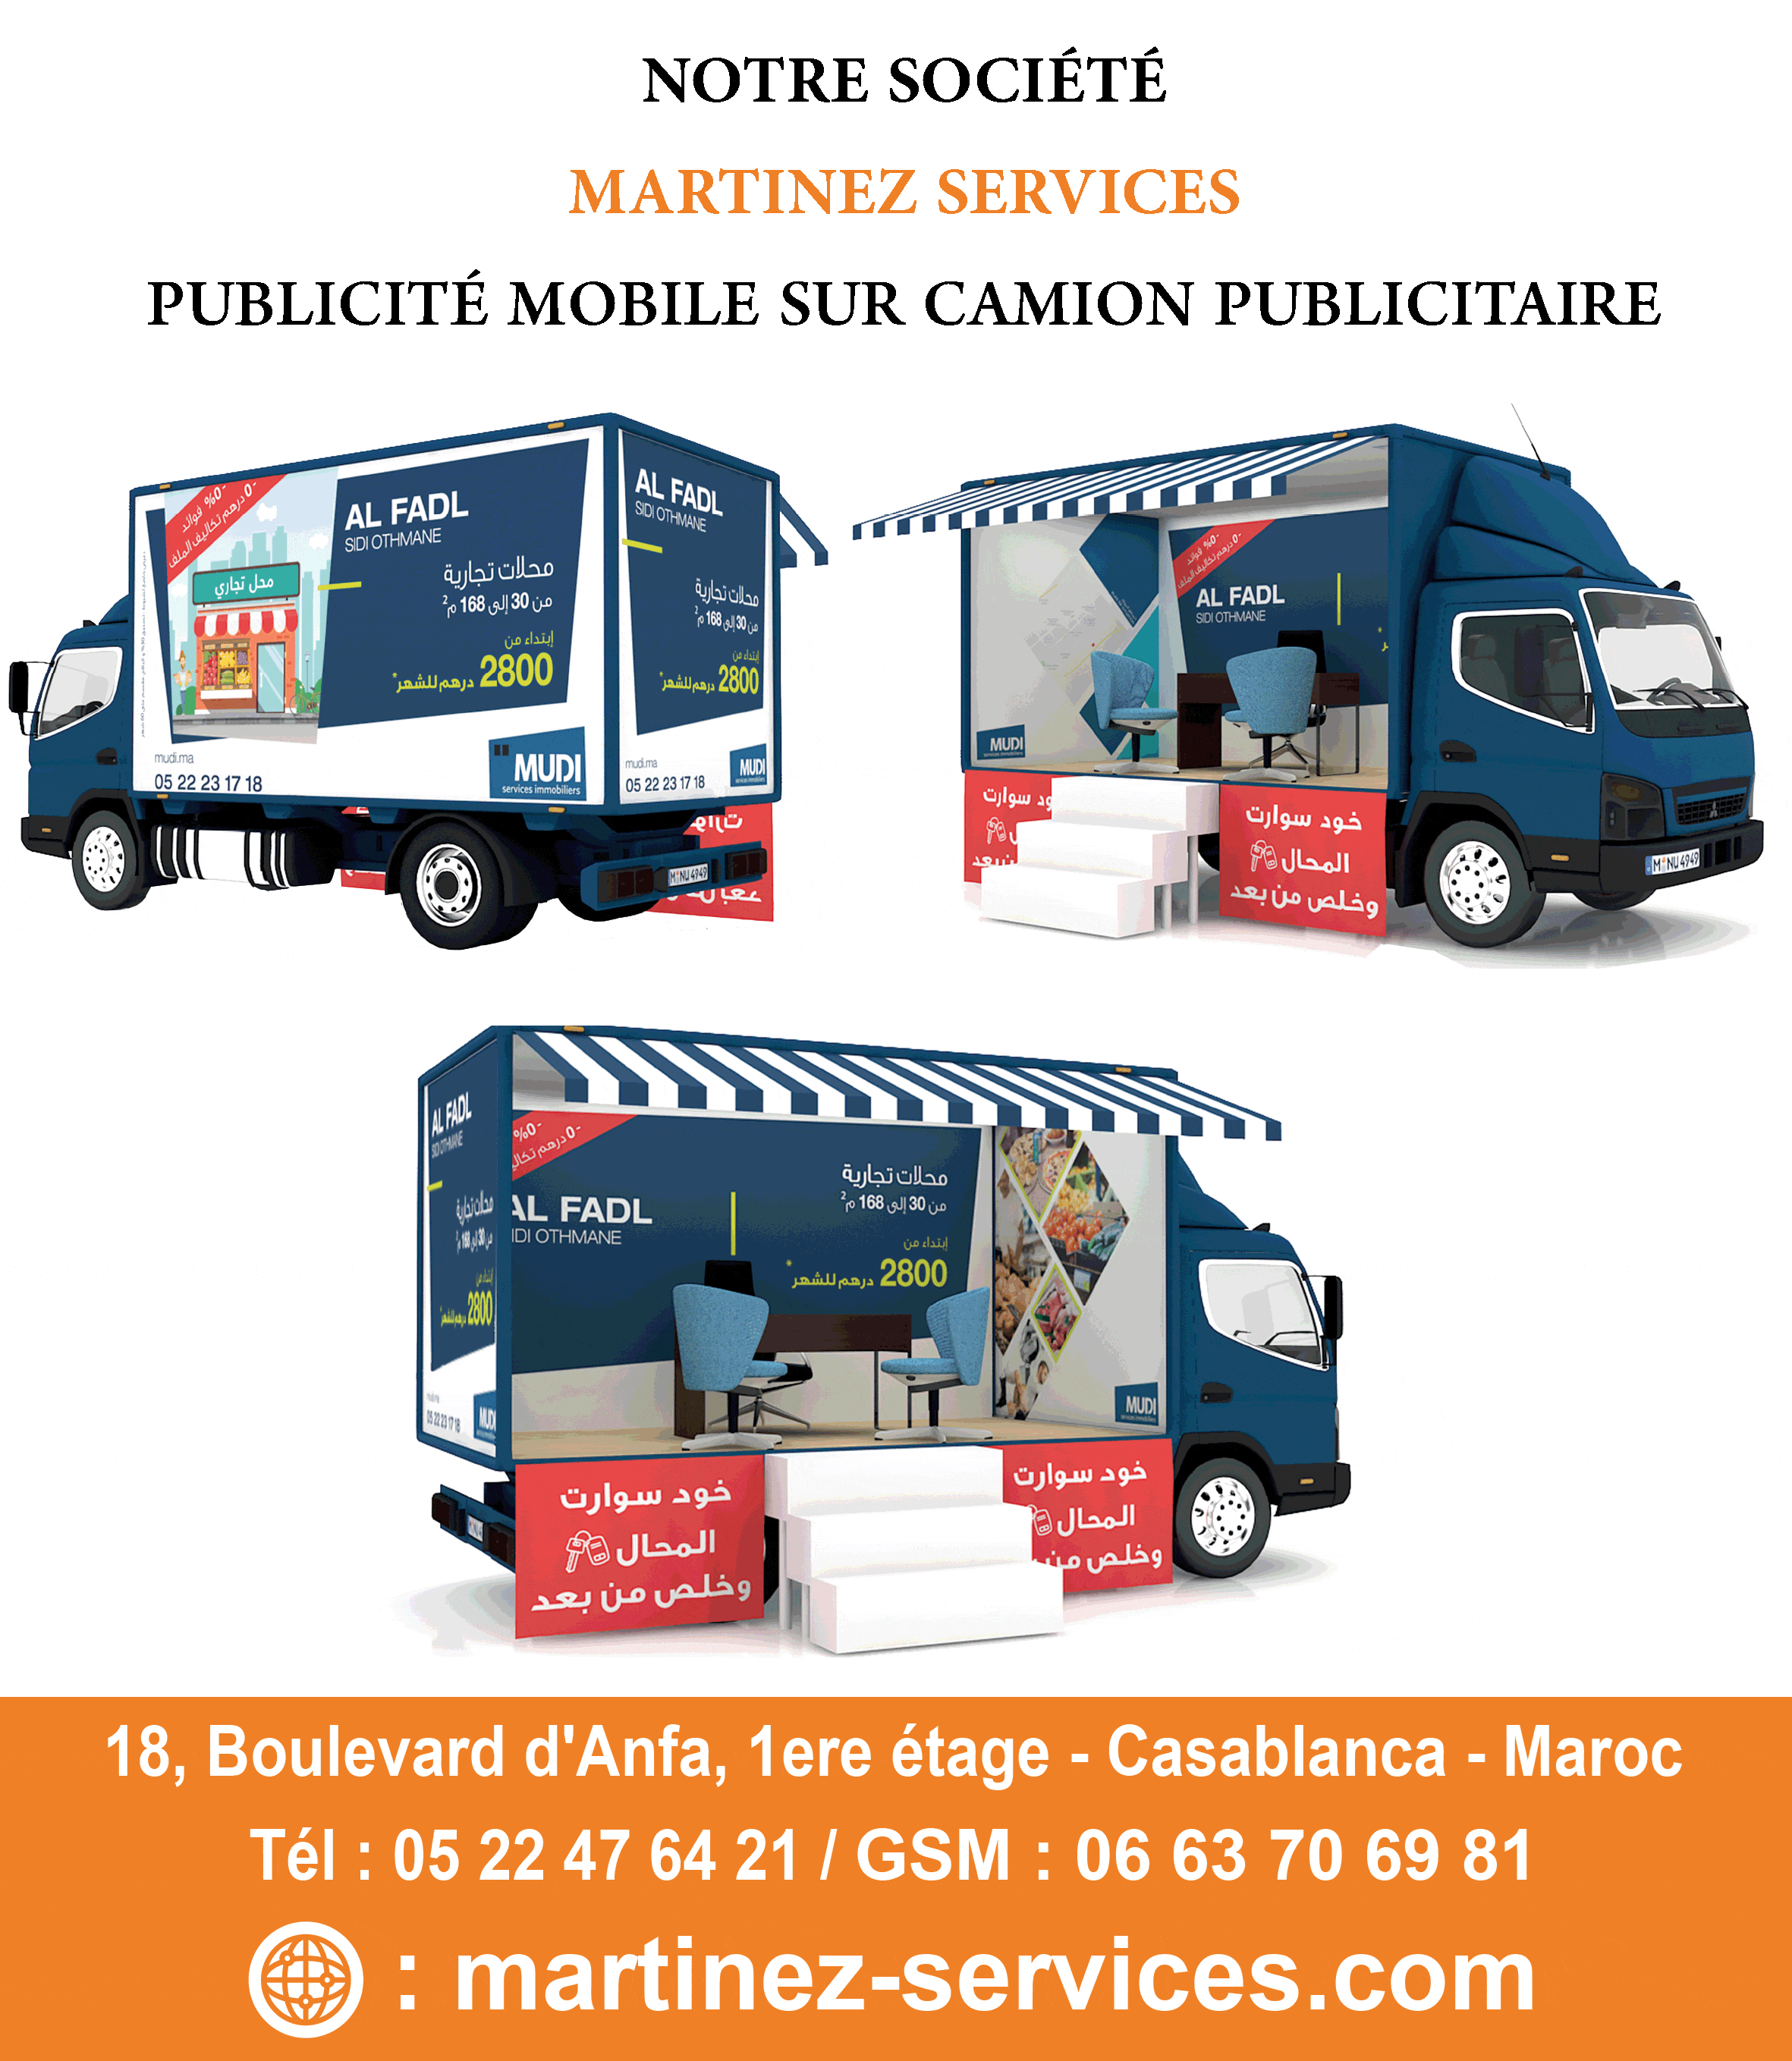 Martinez Services